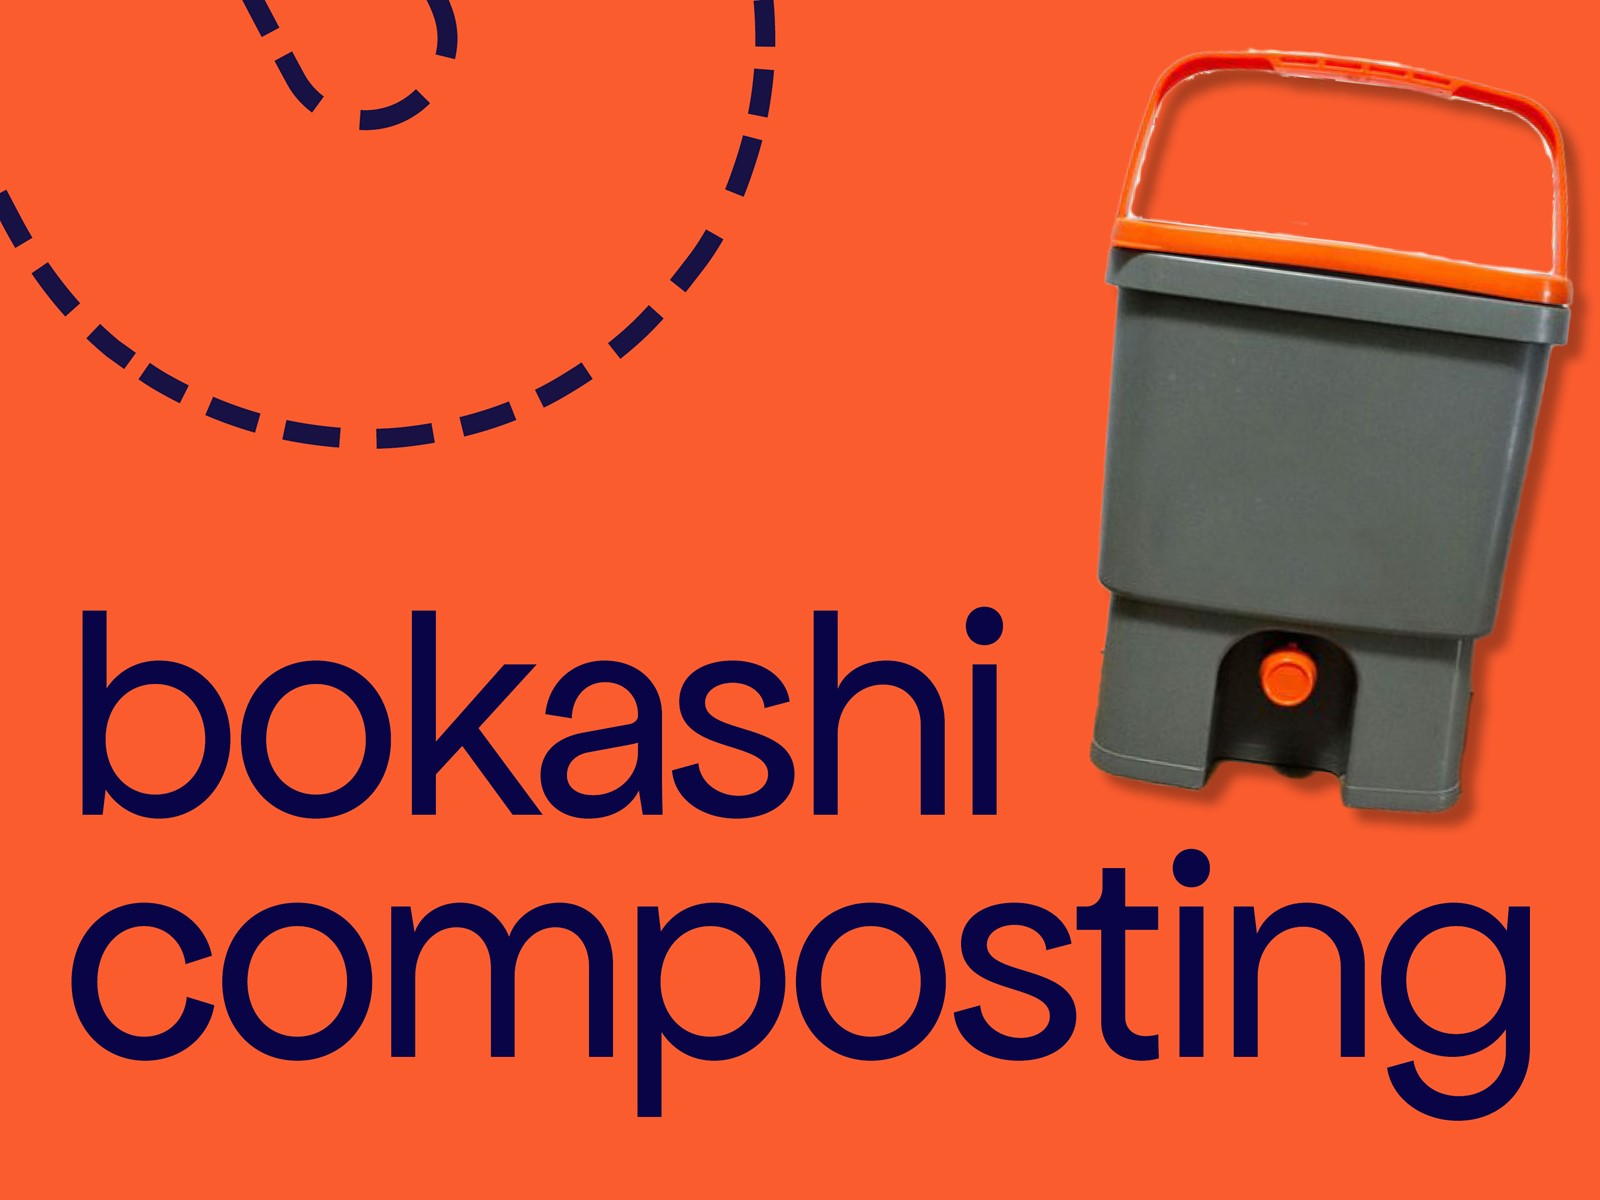 Bokashi composting. 